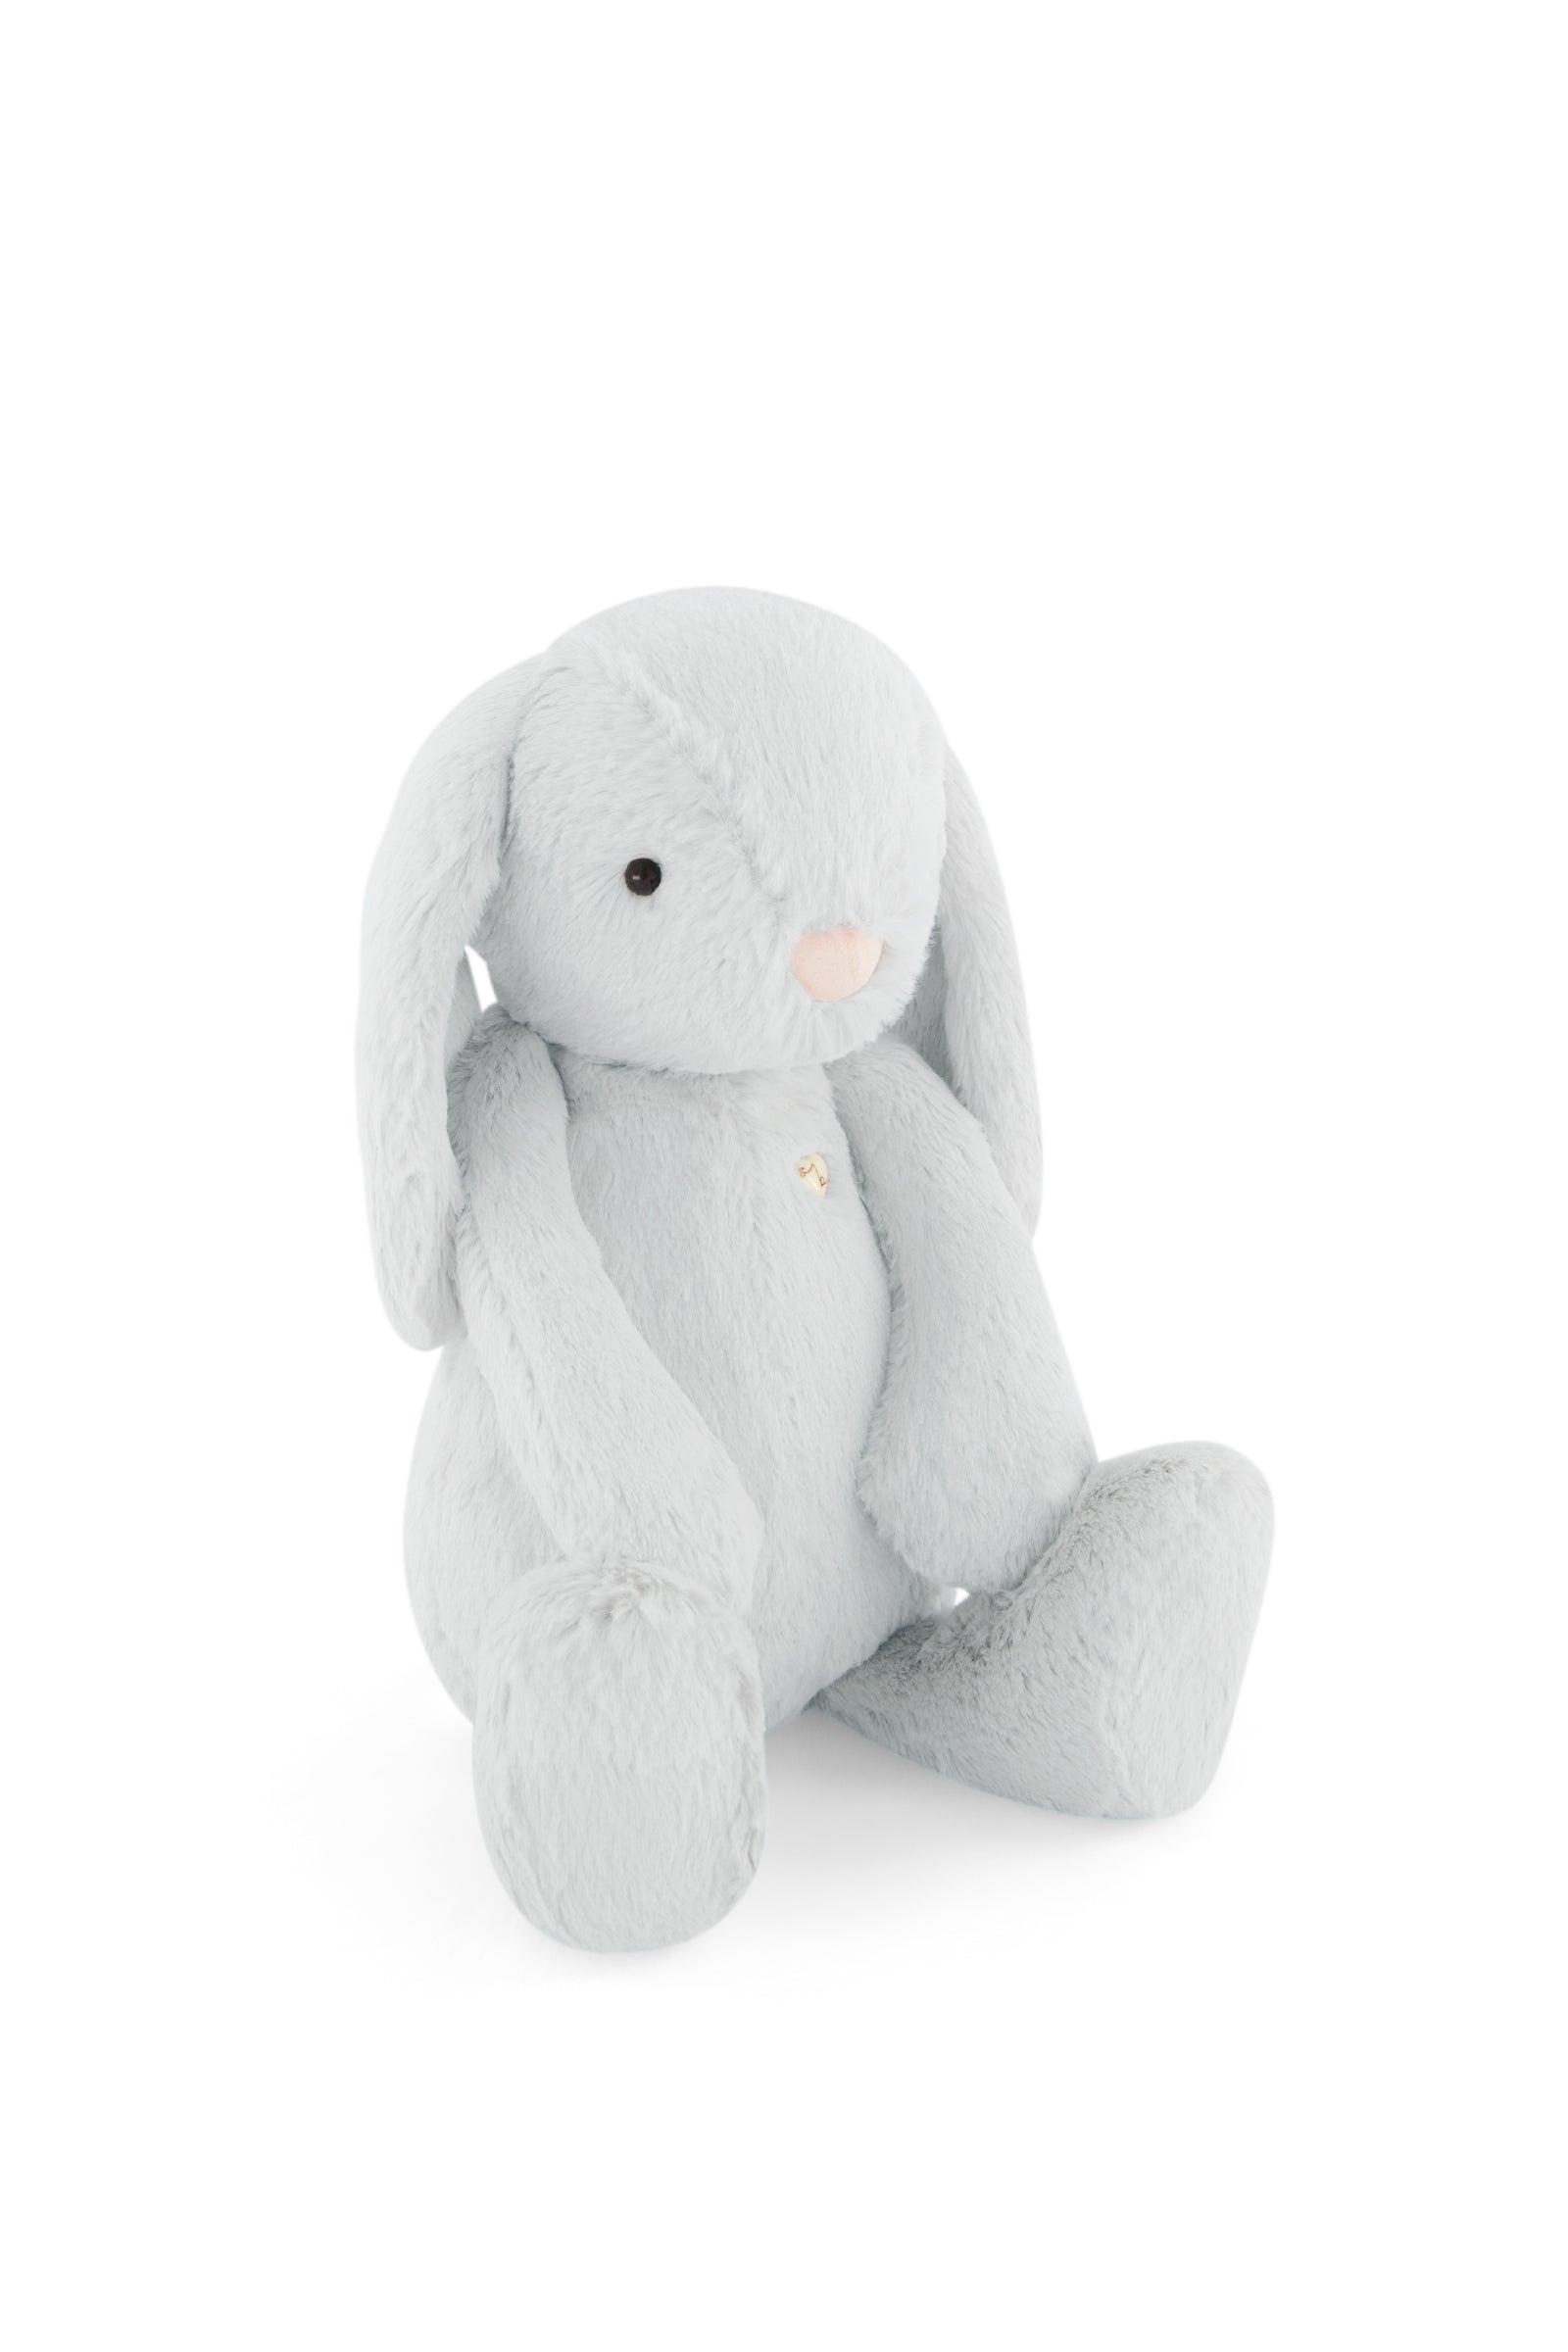 Snuggle Bunnies | Penelope the Bunny | Moonbeam